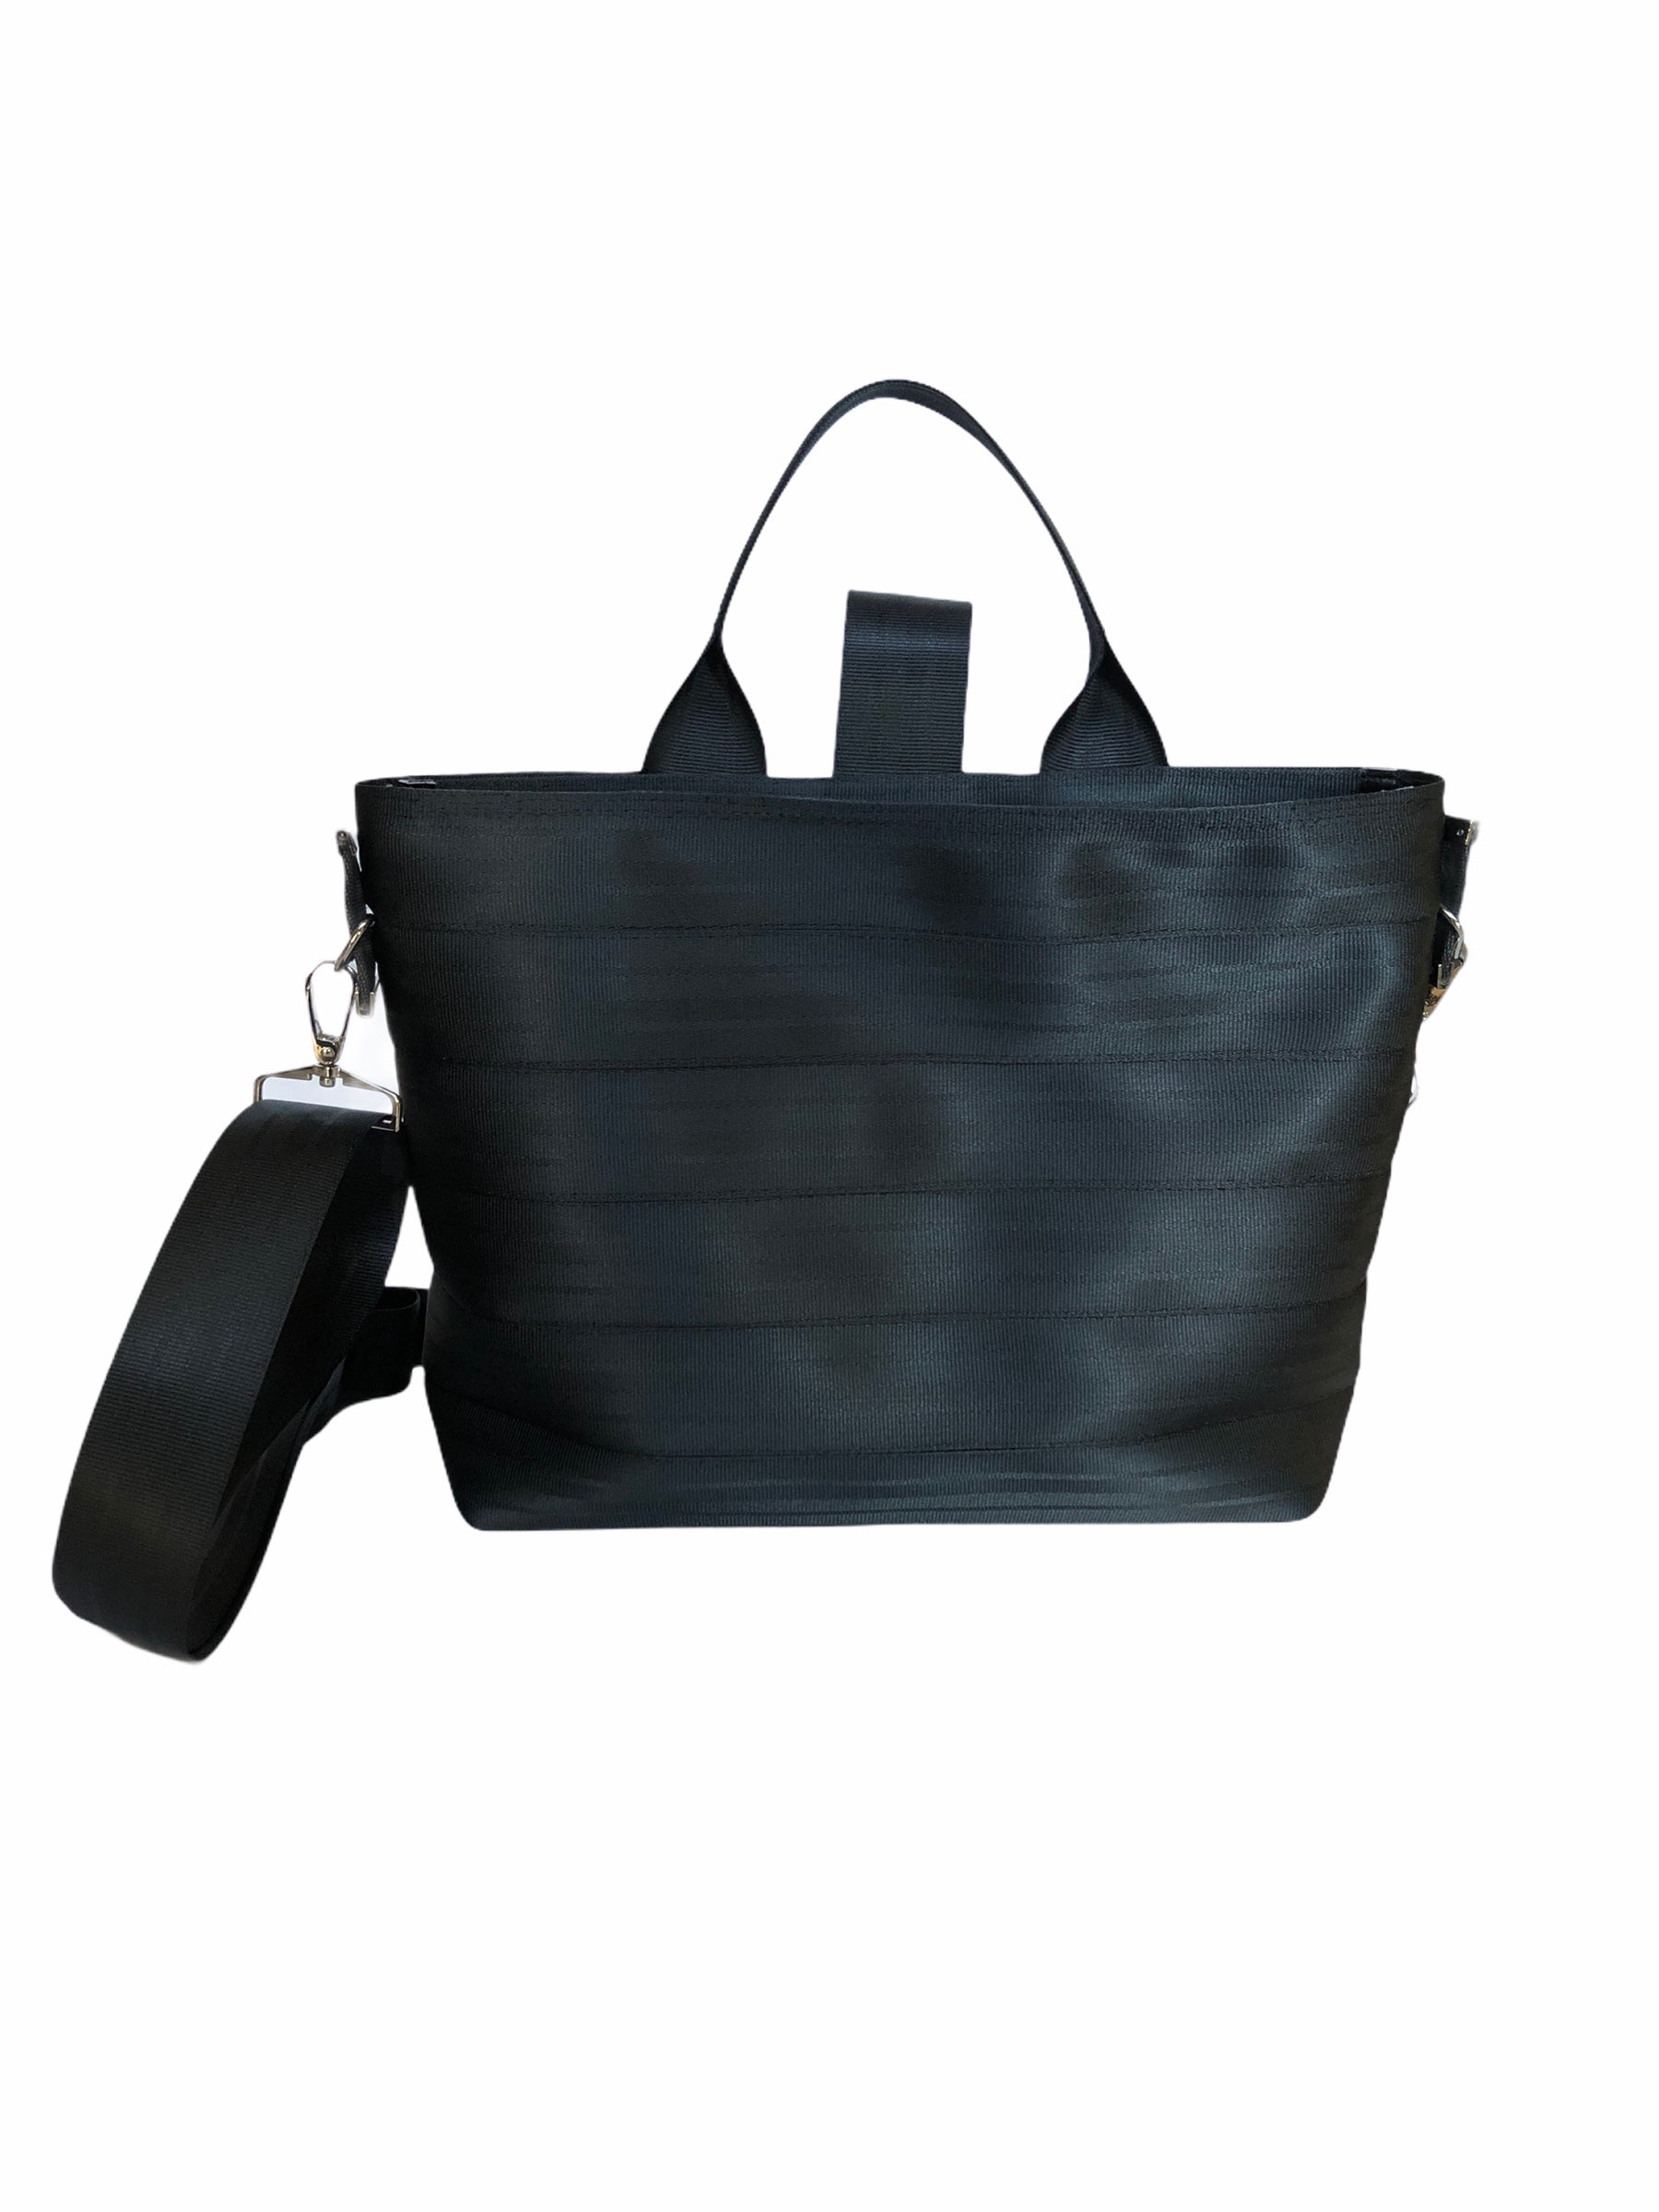 Harvey's Seatbelt Bags LTD limited edition Gary Baseman mini messenger  woven - Women's handbags